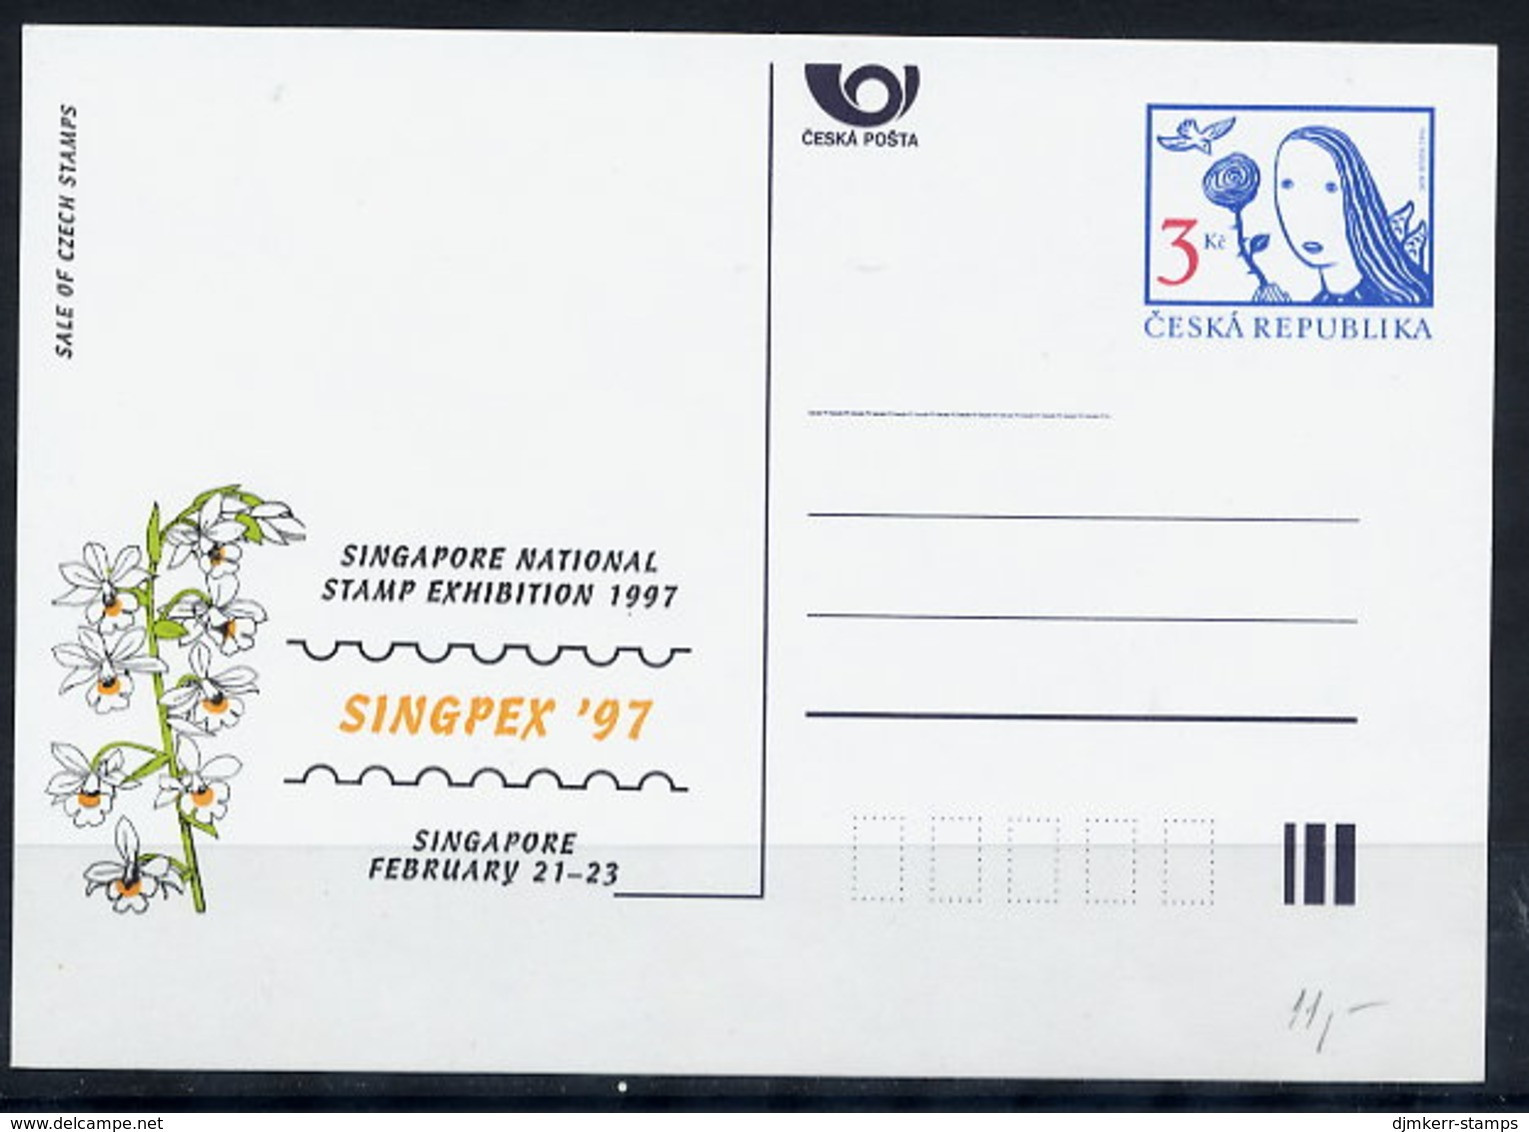 CZECH REPUBLIC 1997 3 Kc. Postcard SINGPEX 1997, Unused.  Michel P18-A3 - Postcards